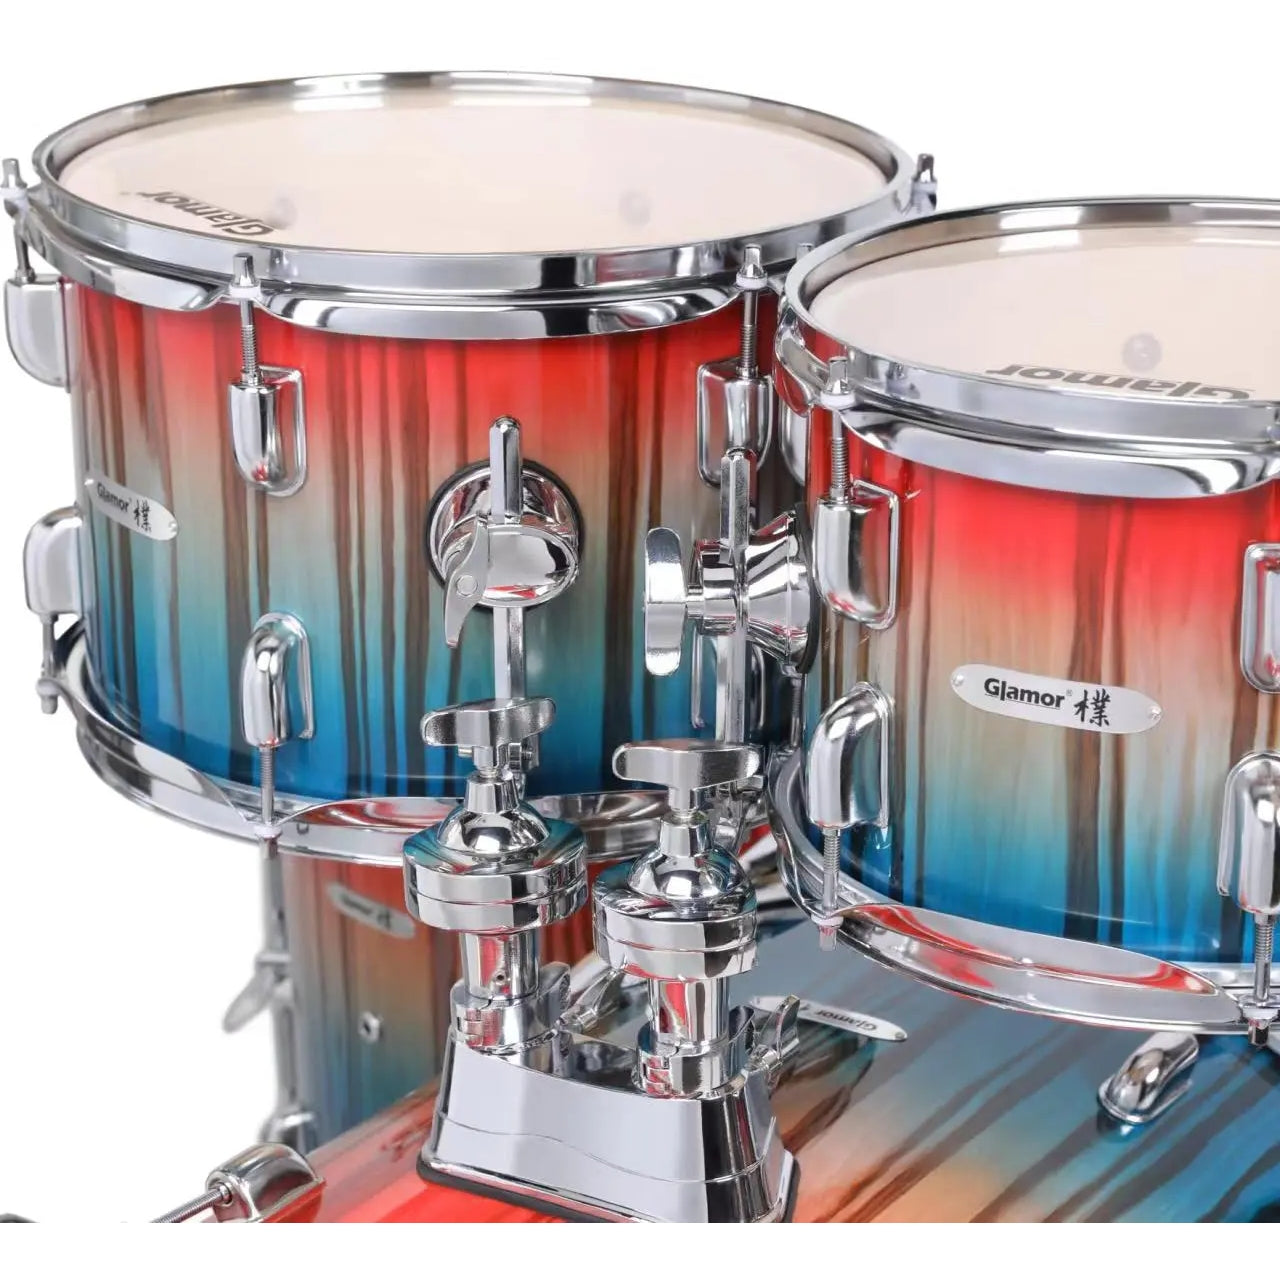 Trống Cơ Glamor PS522 Series Drum Kits - Việt Music